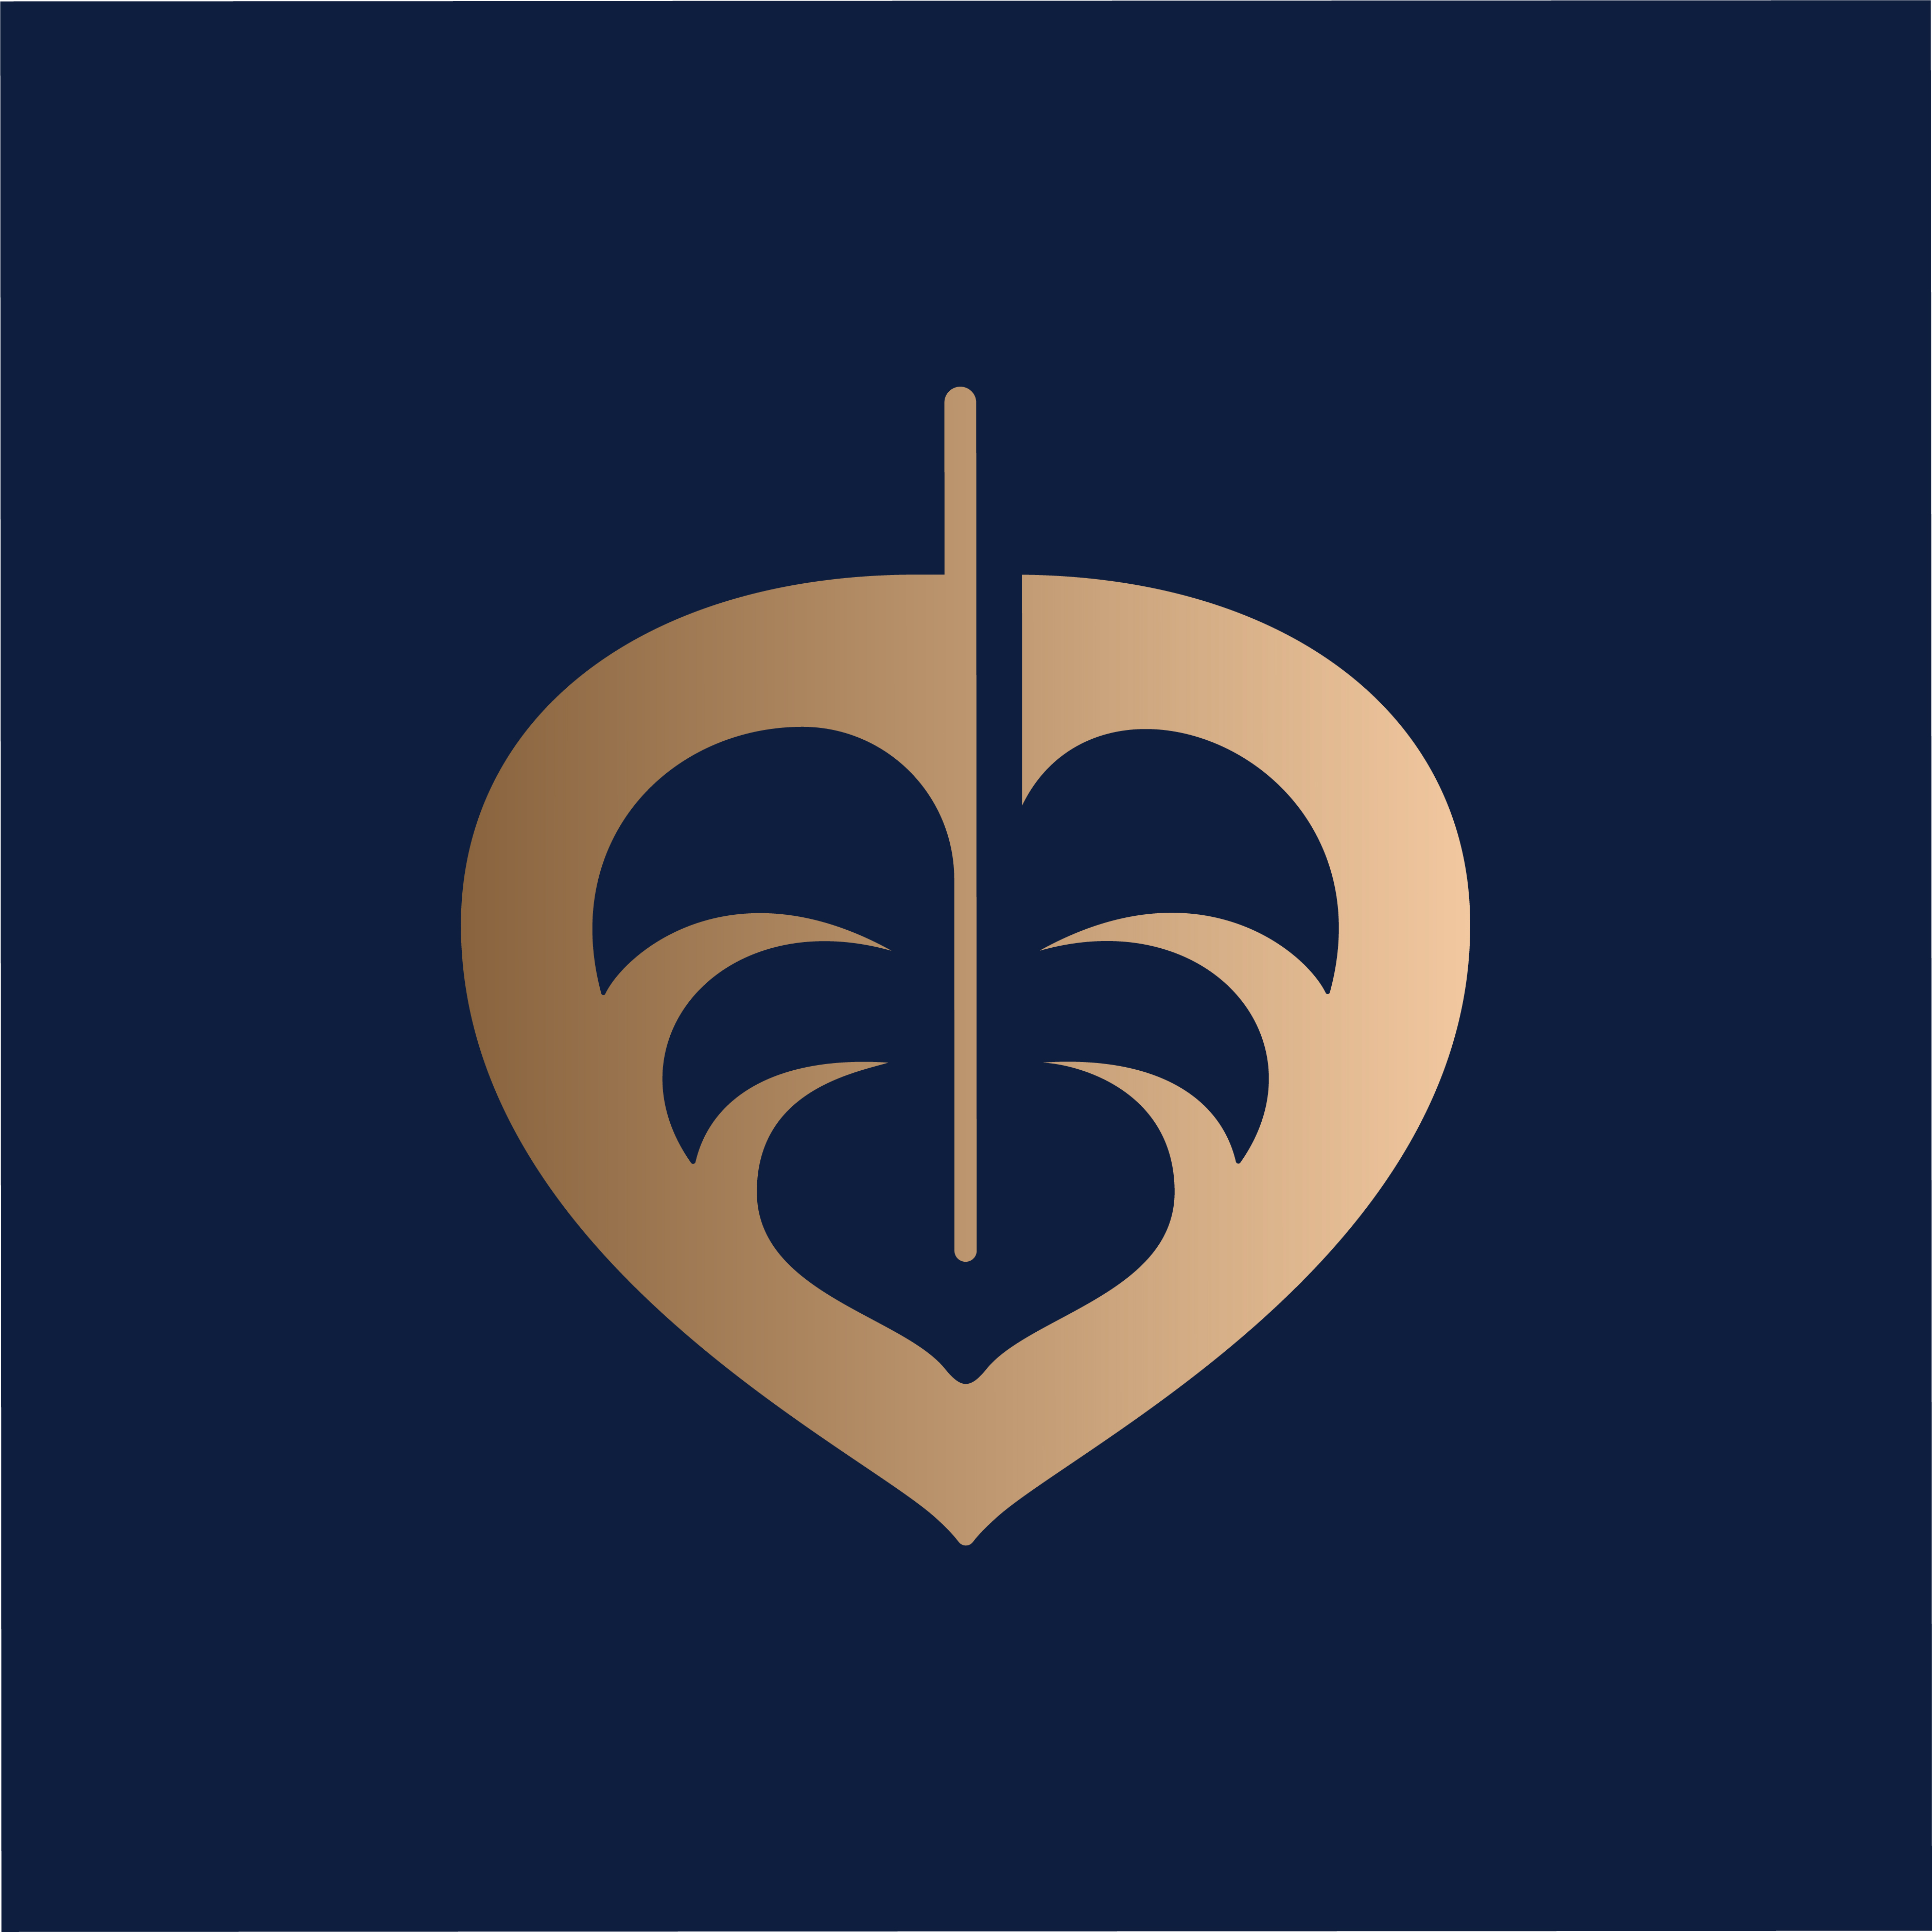 Leaf logo design by logo designer Pragmatika for your inspiration and for the worlds largest logo competition